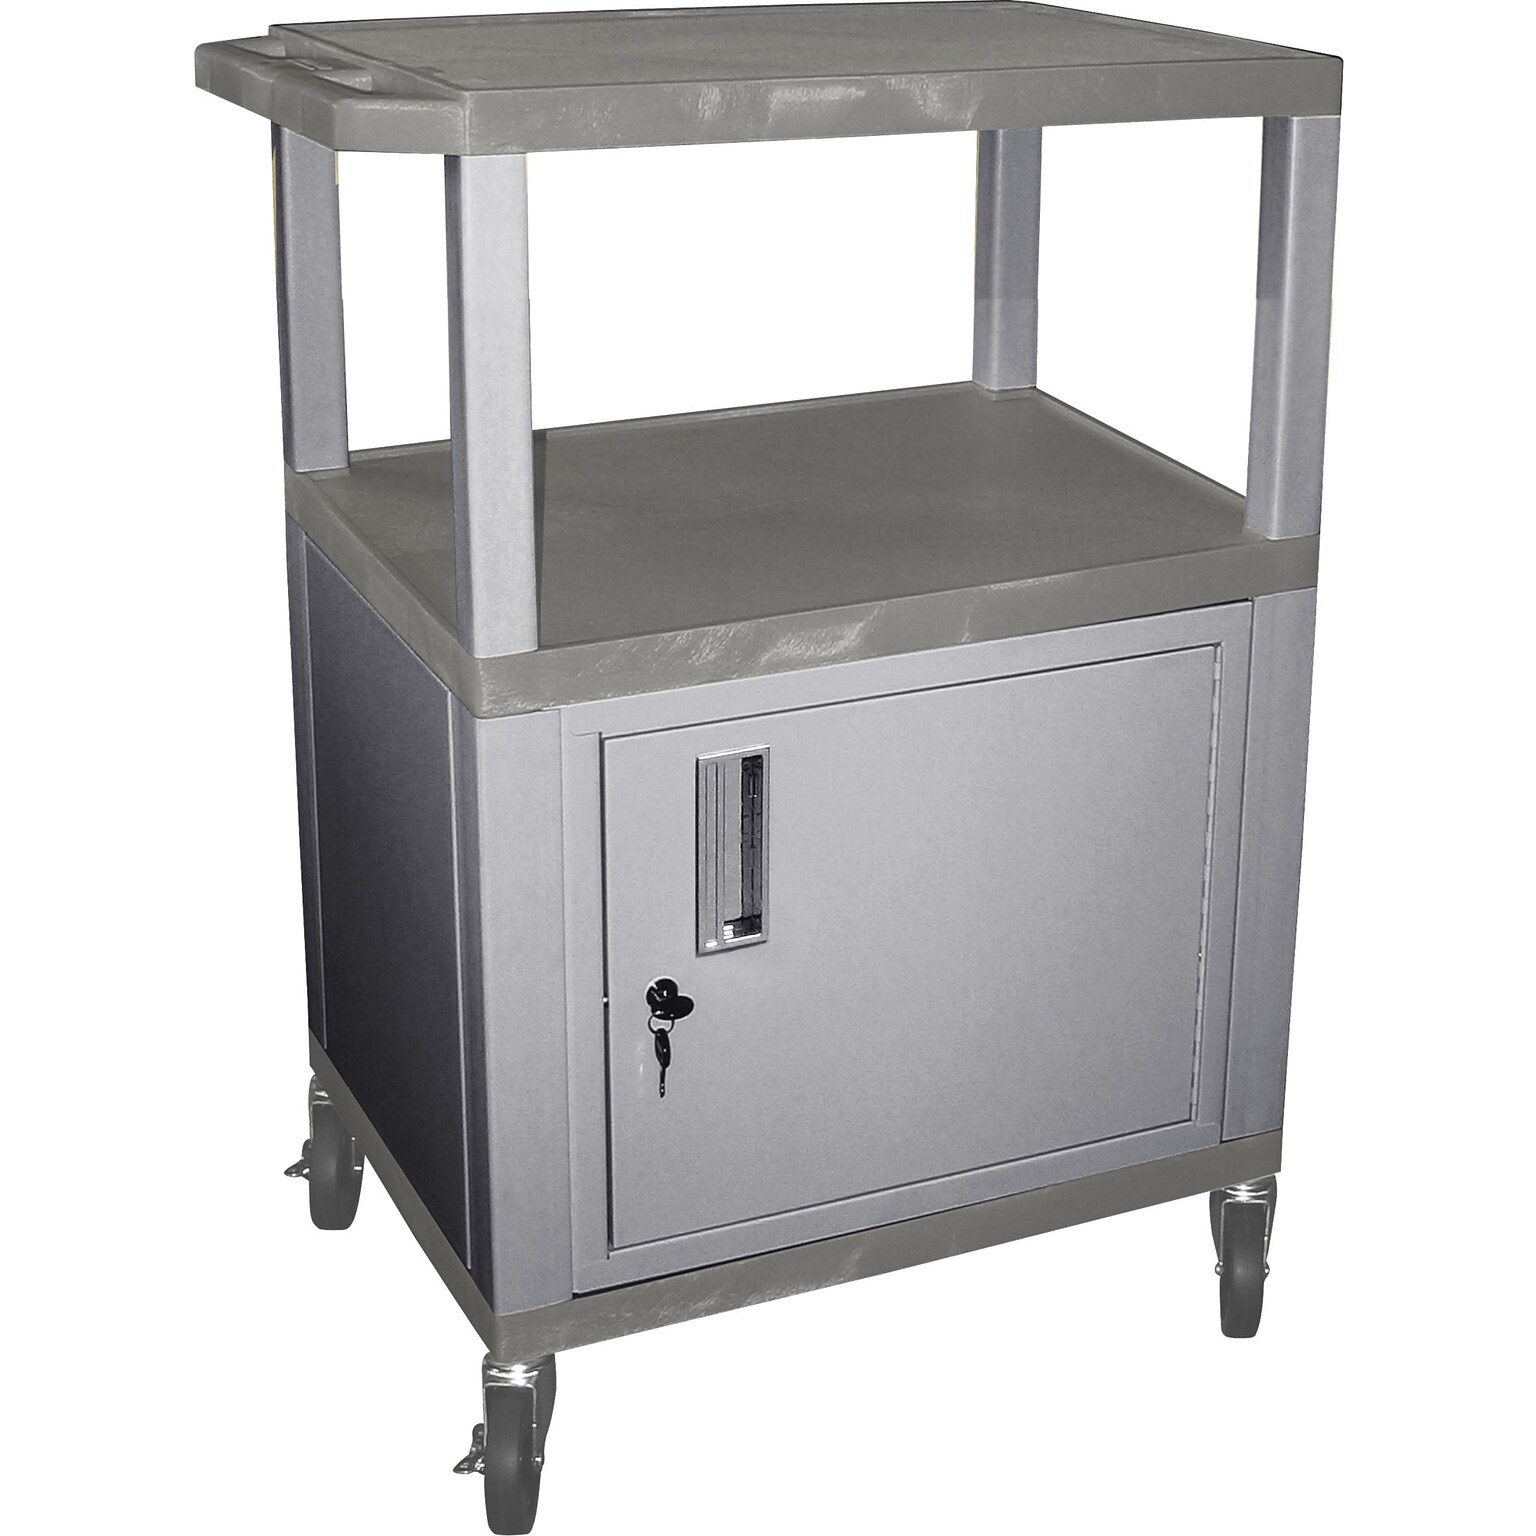 H Wilson 34H 3 Shelves Tuffy AV Cart W/Nickel Legs, Cabinet & Electrical Attachment, Gray